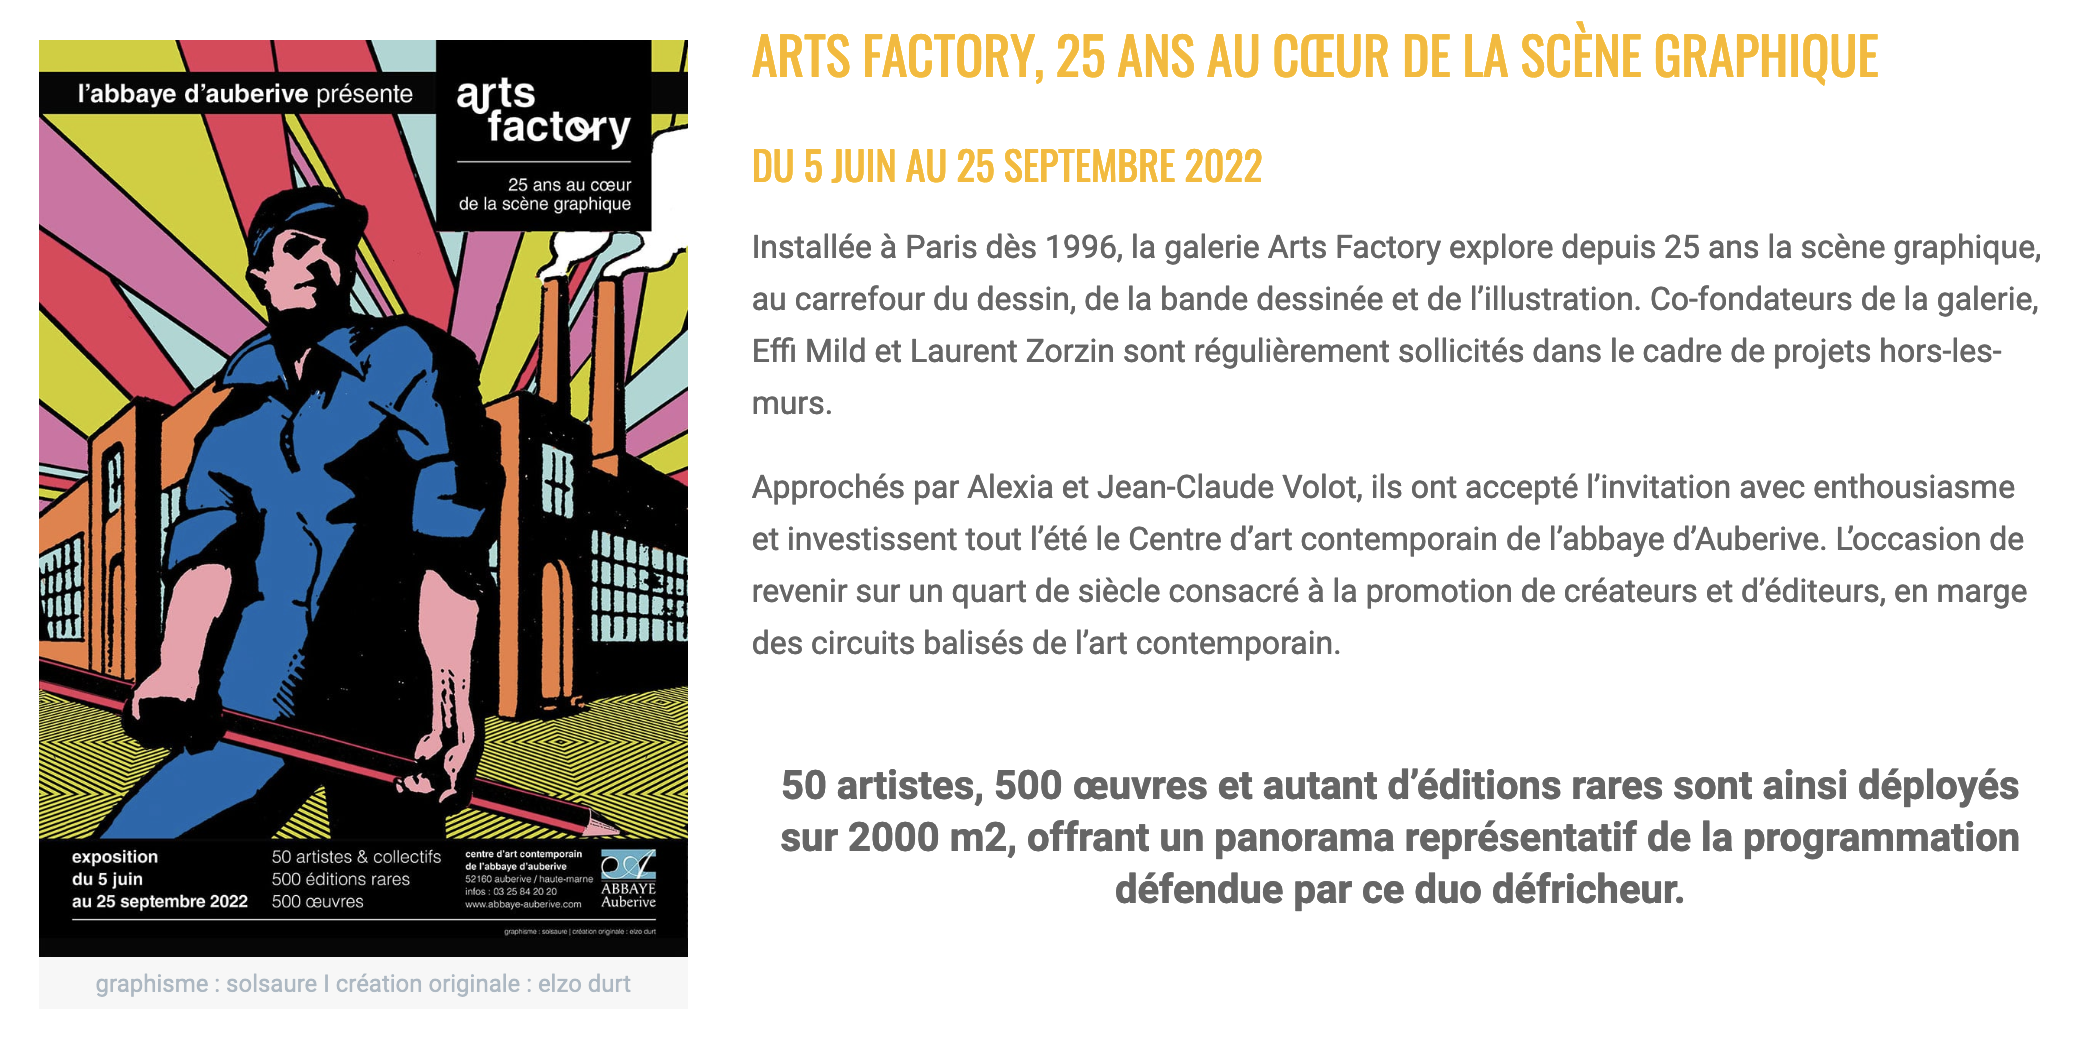 Arts Factory